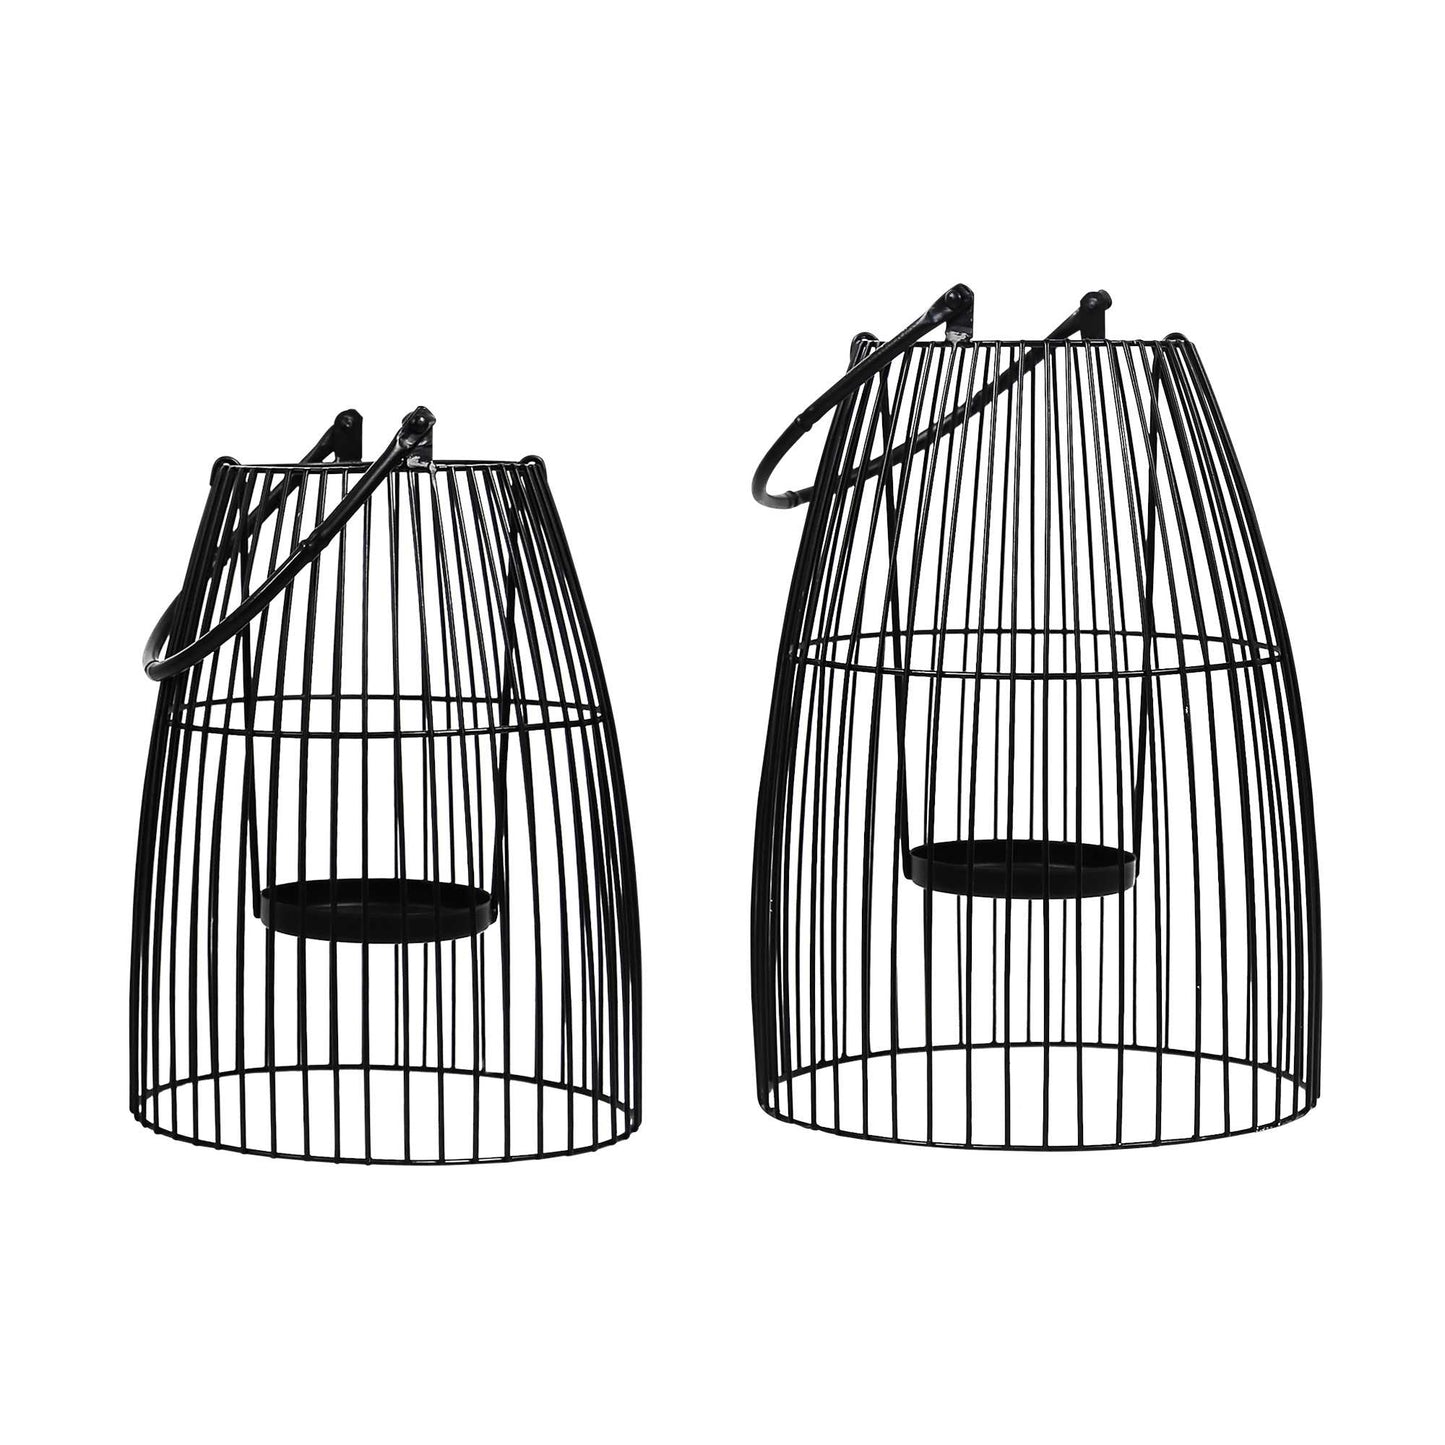 Birdcage-Style Metal Lanterns